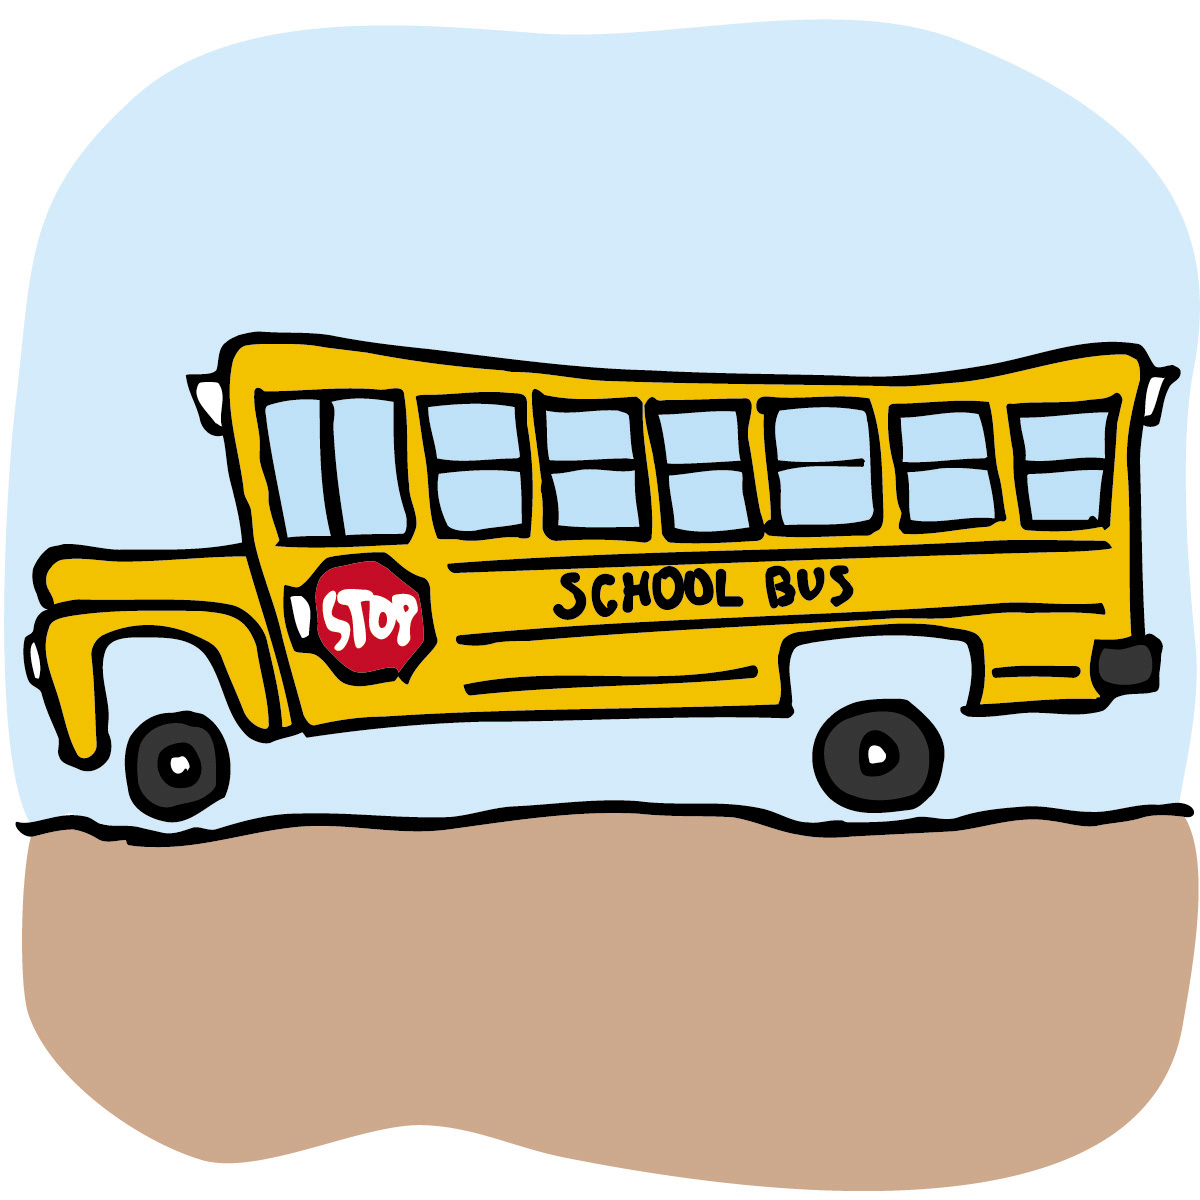 School bus to the school clipart - ClipartFox